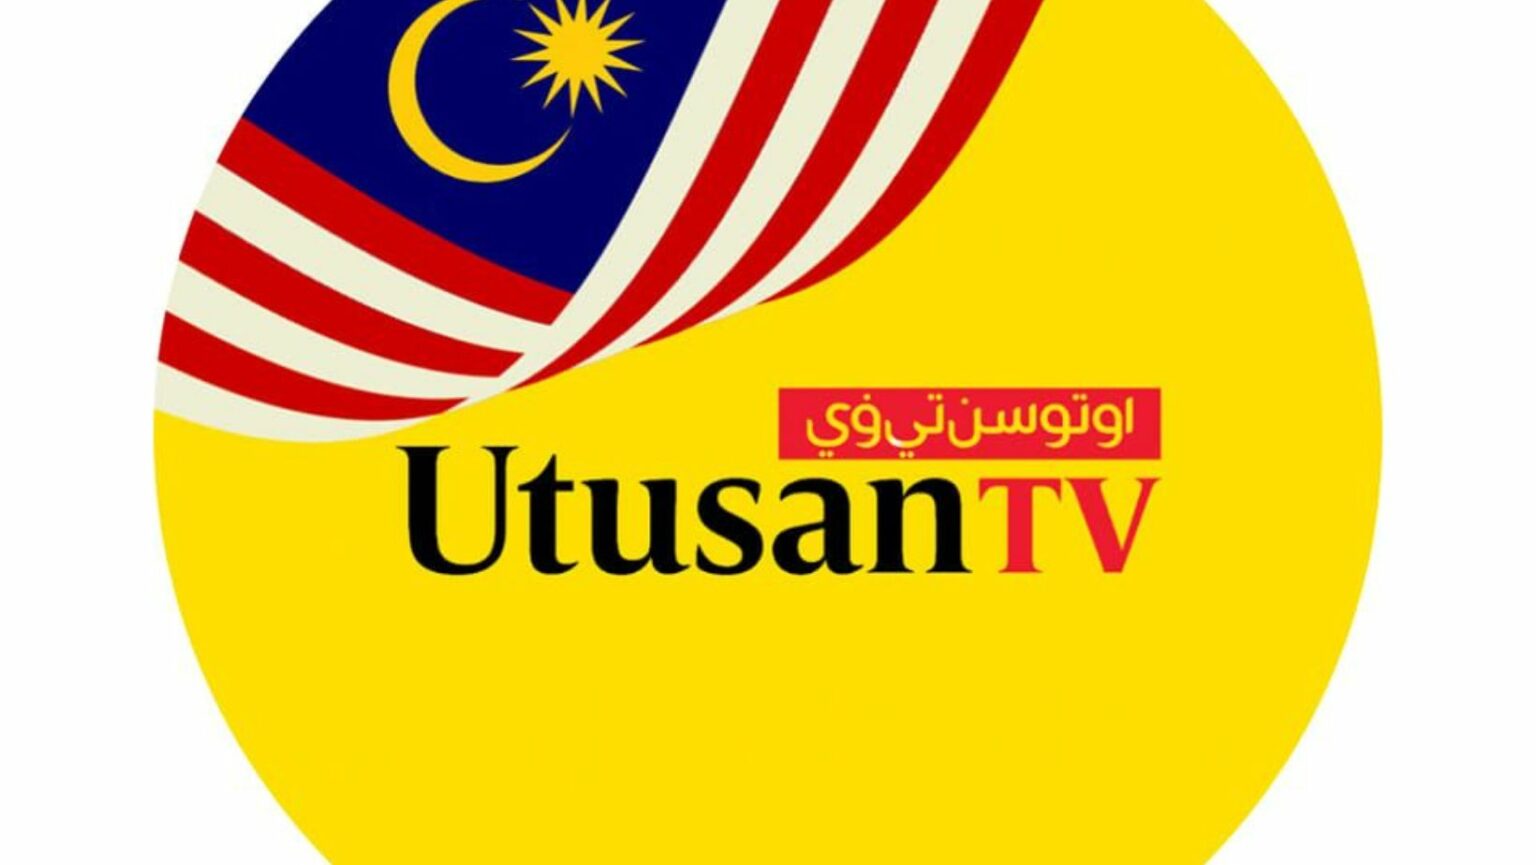 UtusanTV